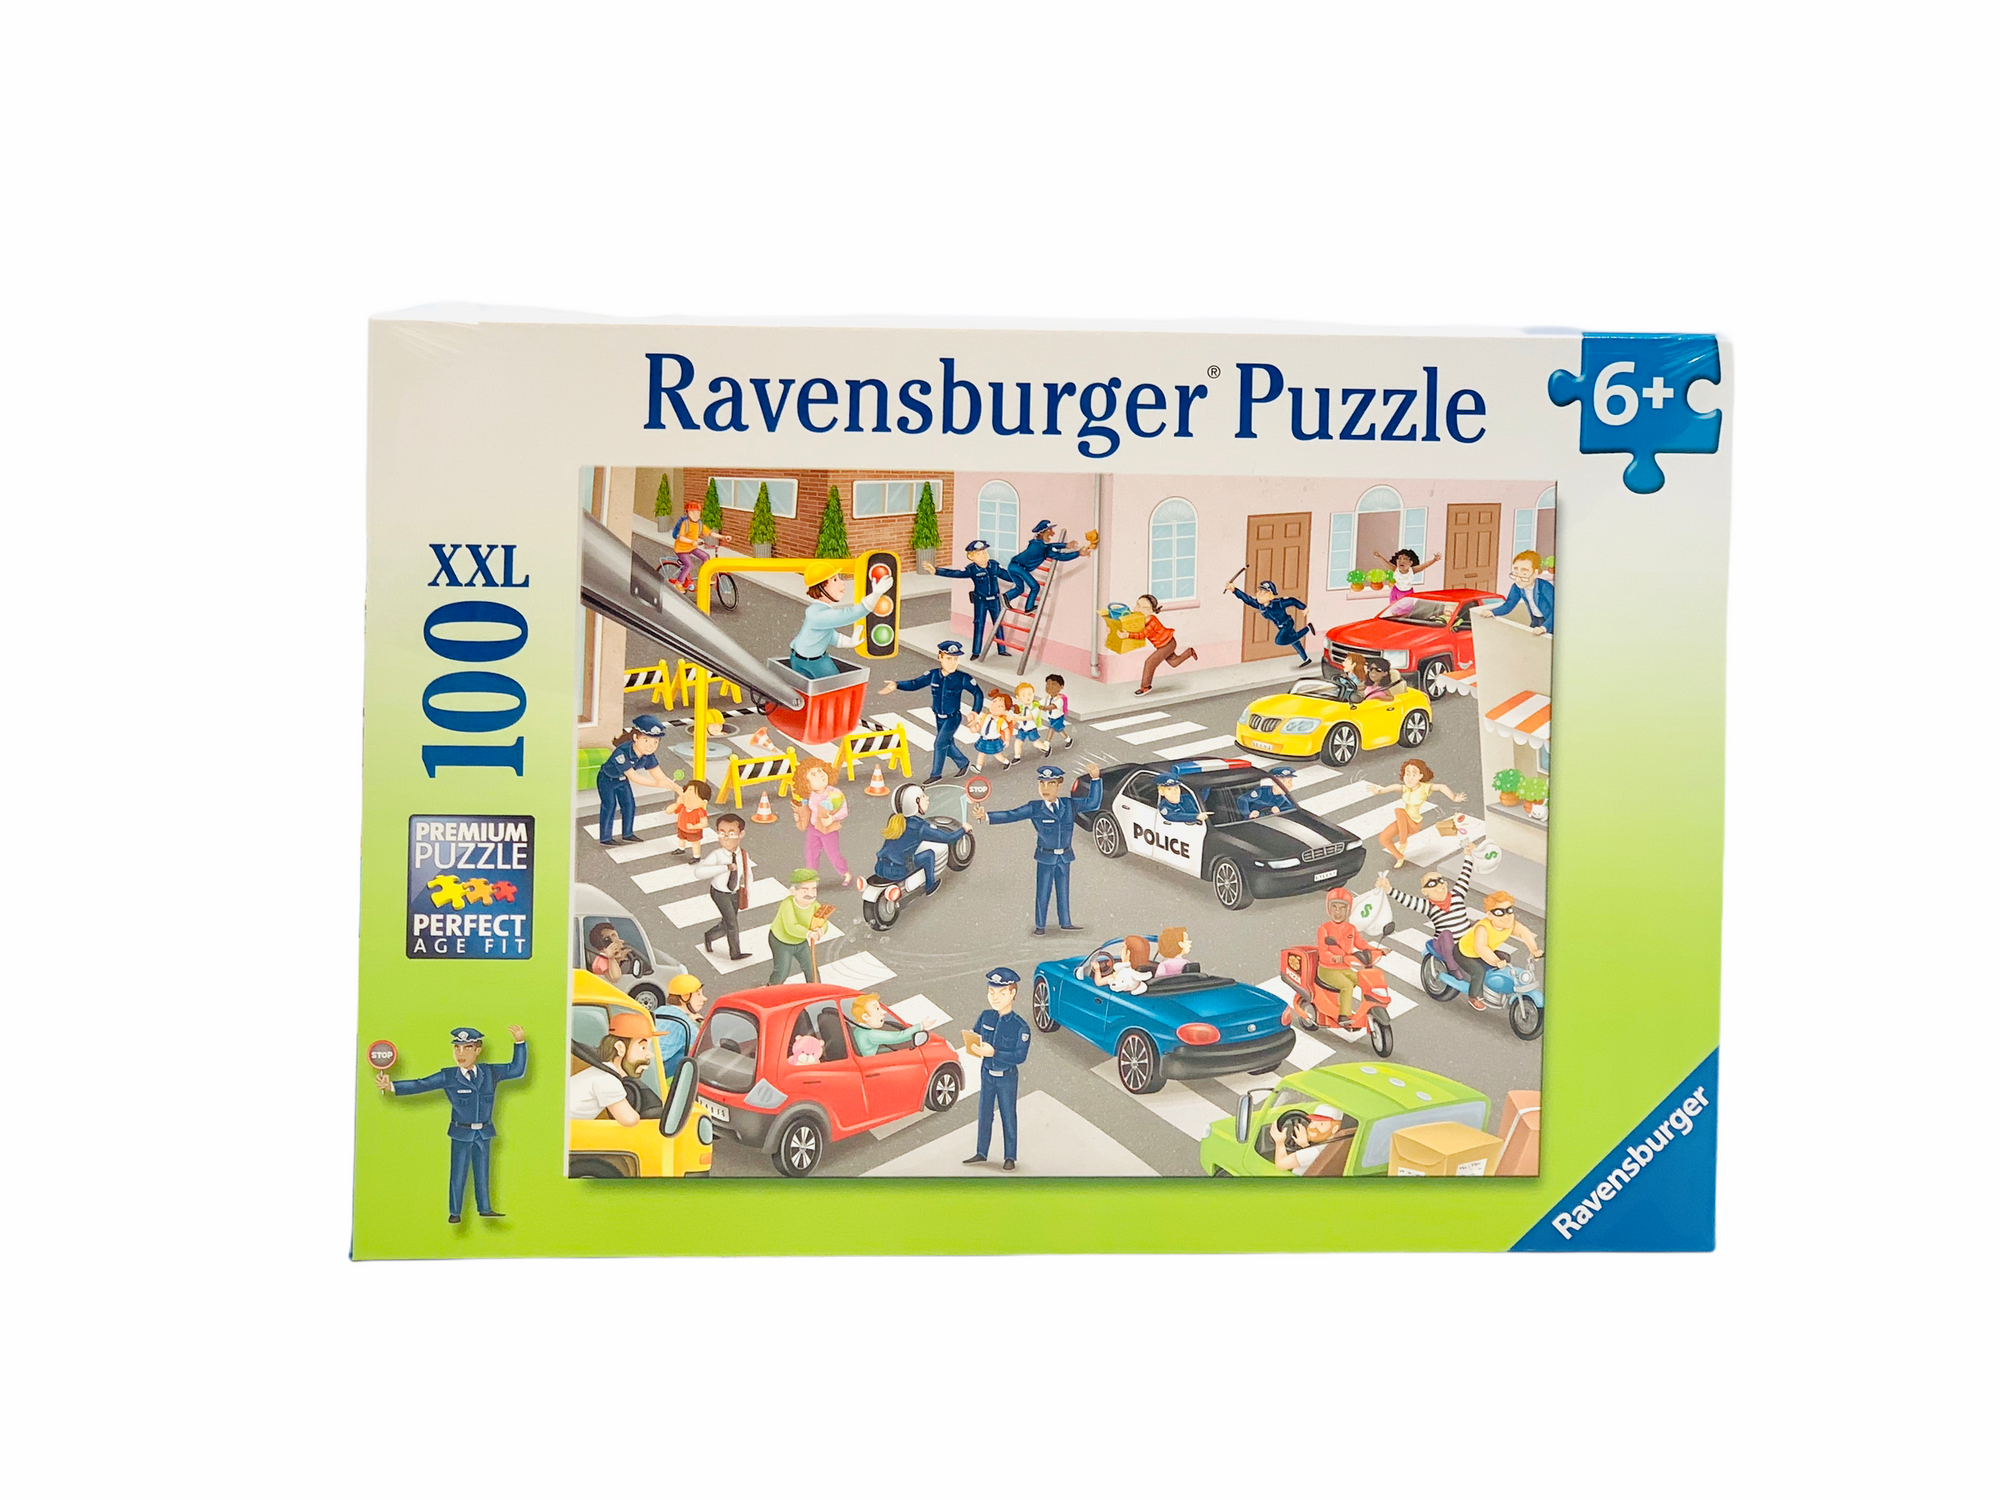 Ravensburger Puzzle - Police on Patrol XXL100 piece set